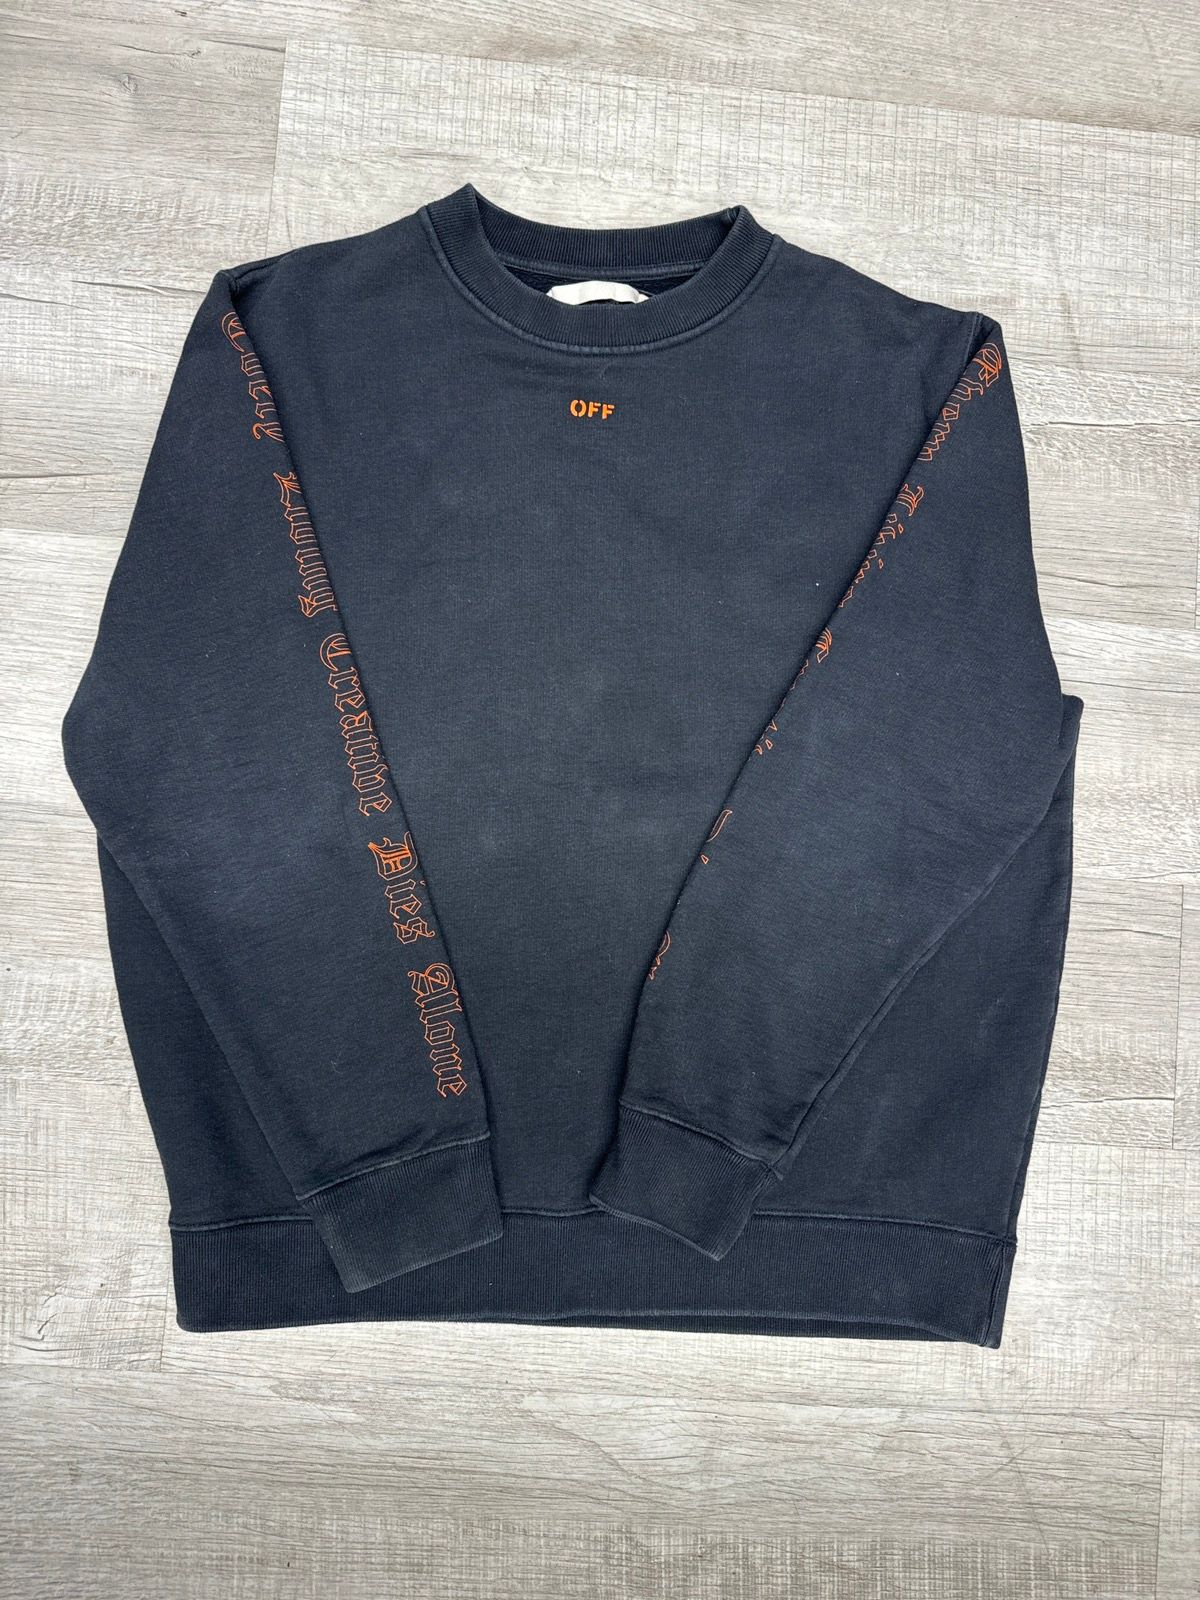 Off-White Vlone Archives Black Orange Sweatshirt | Grailed